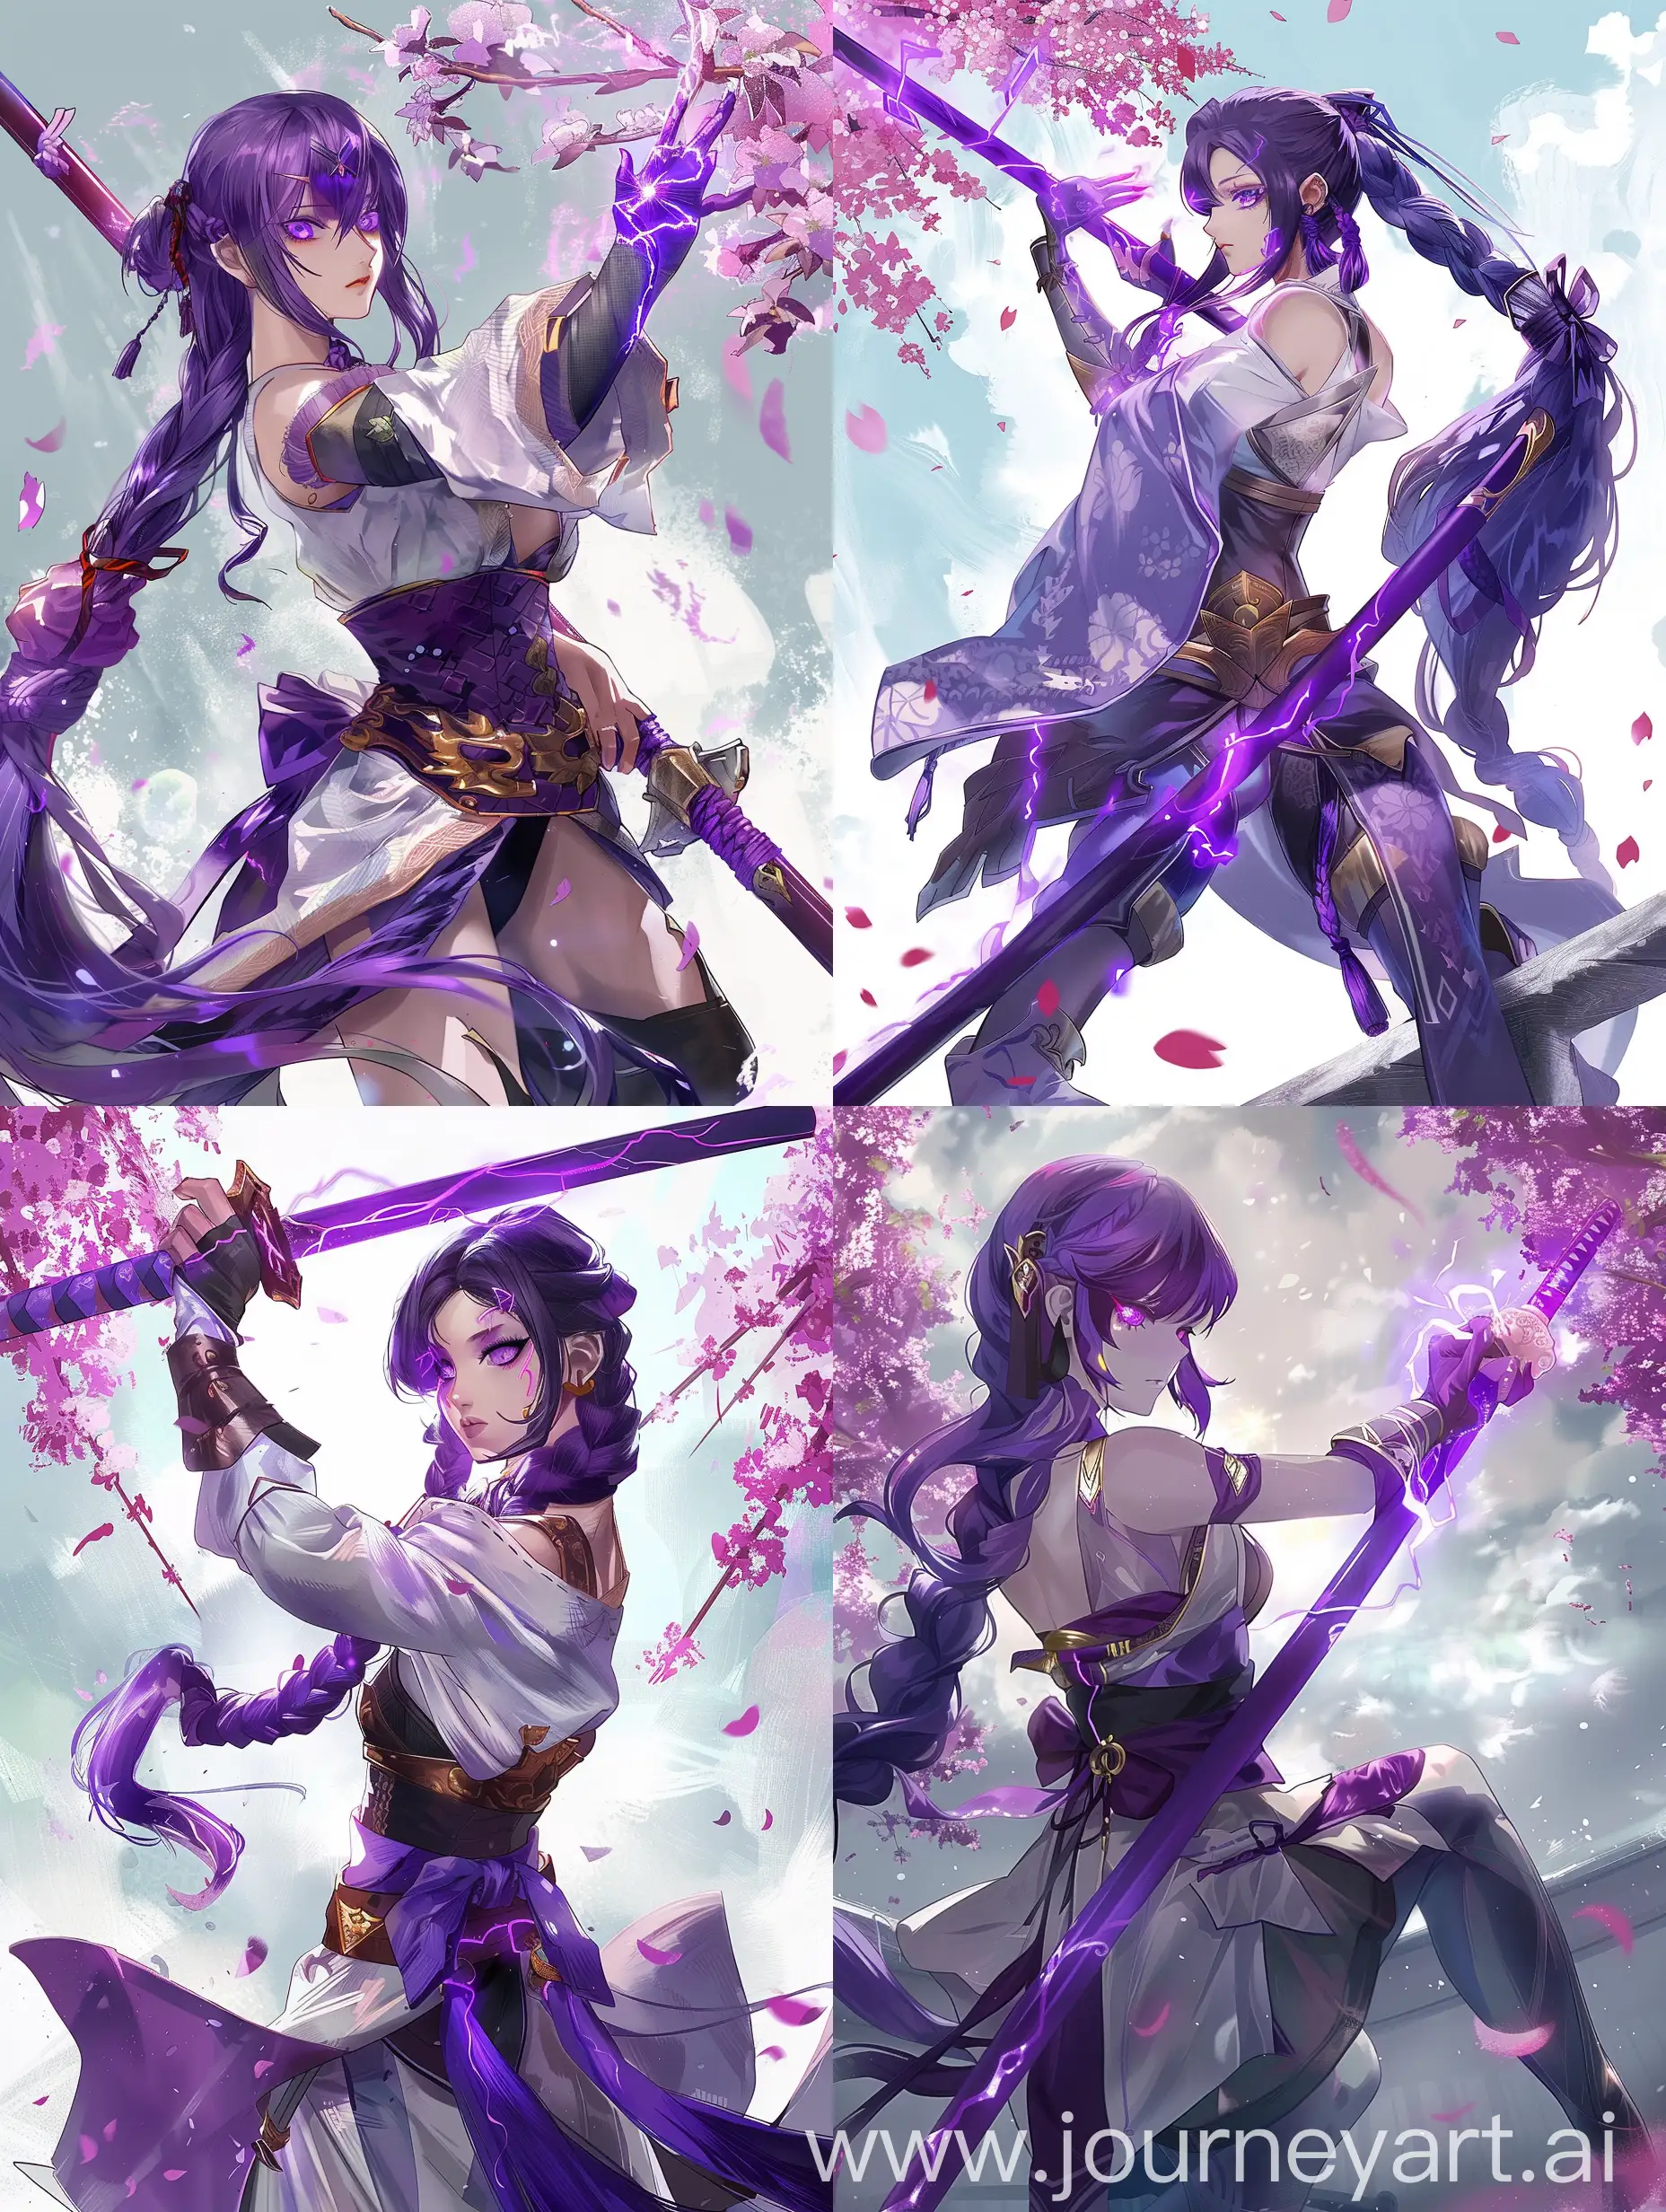 Fierce-PurpleHued-Warrior-with-Electric-Naginata-in-Battle-Stance